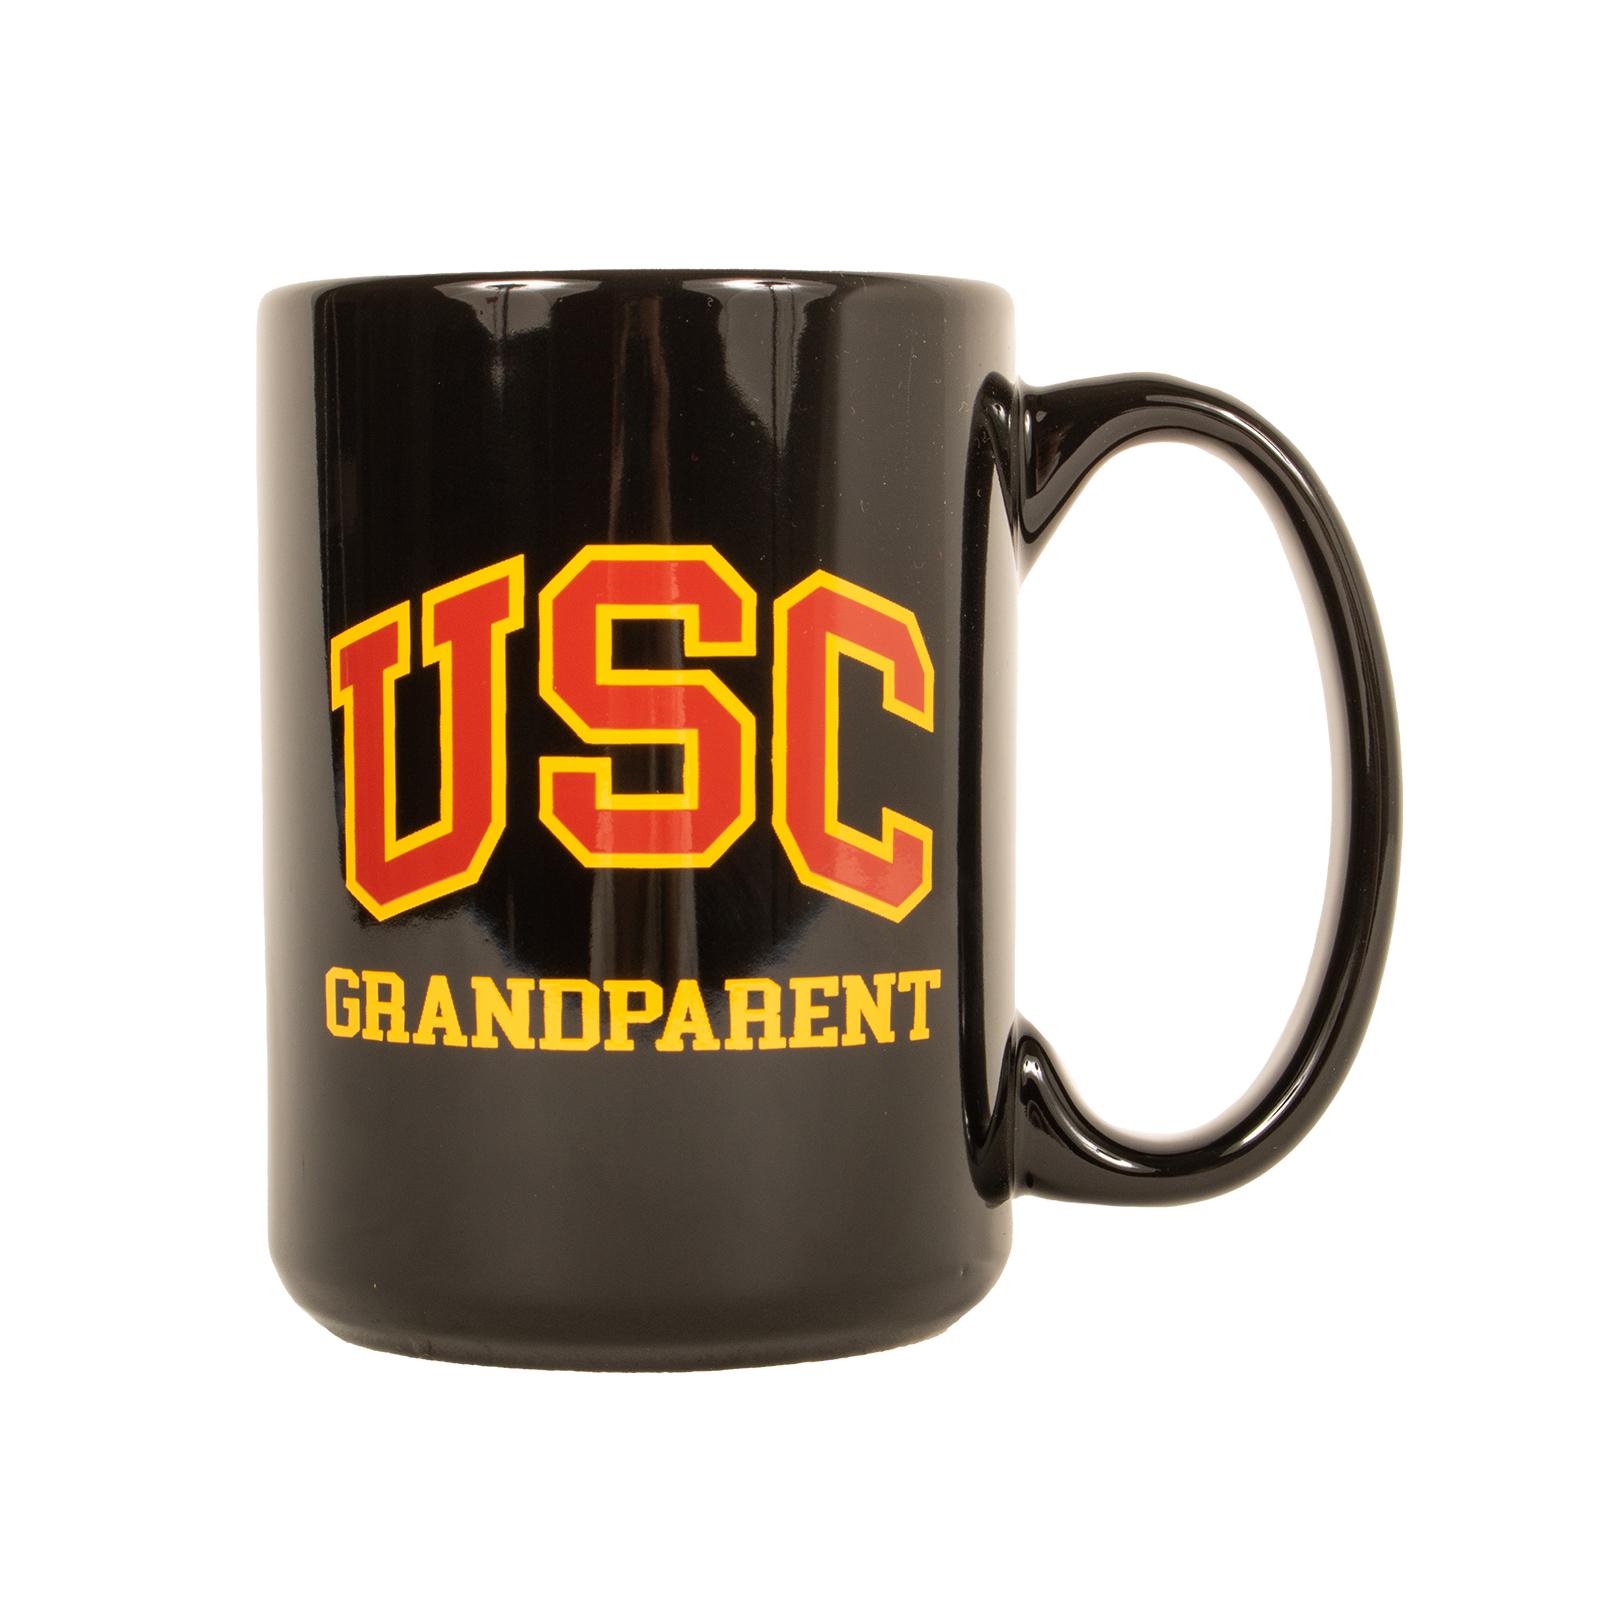 USC Grandparent Mug Black by The U Apparel & Gifts image01